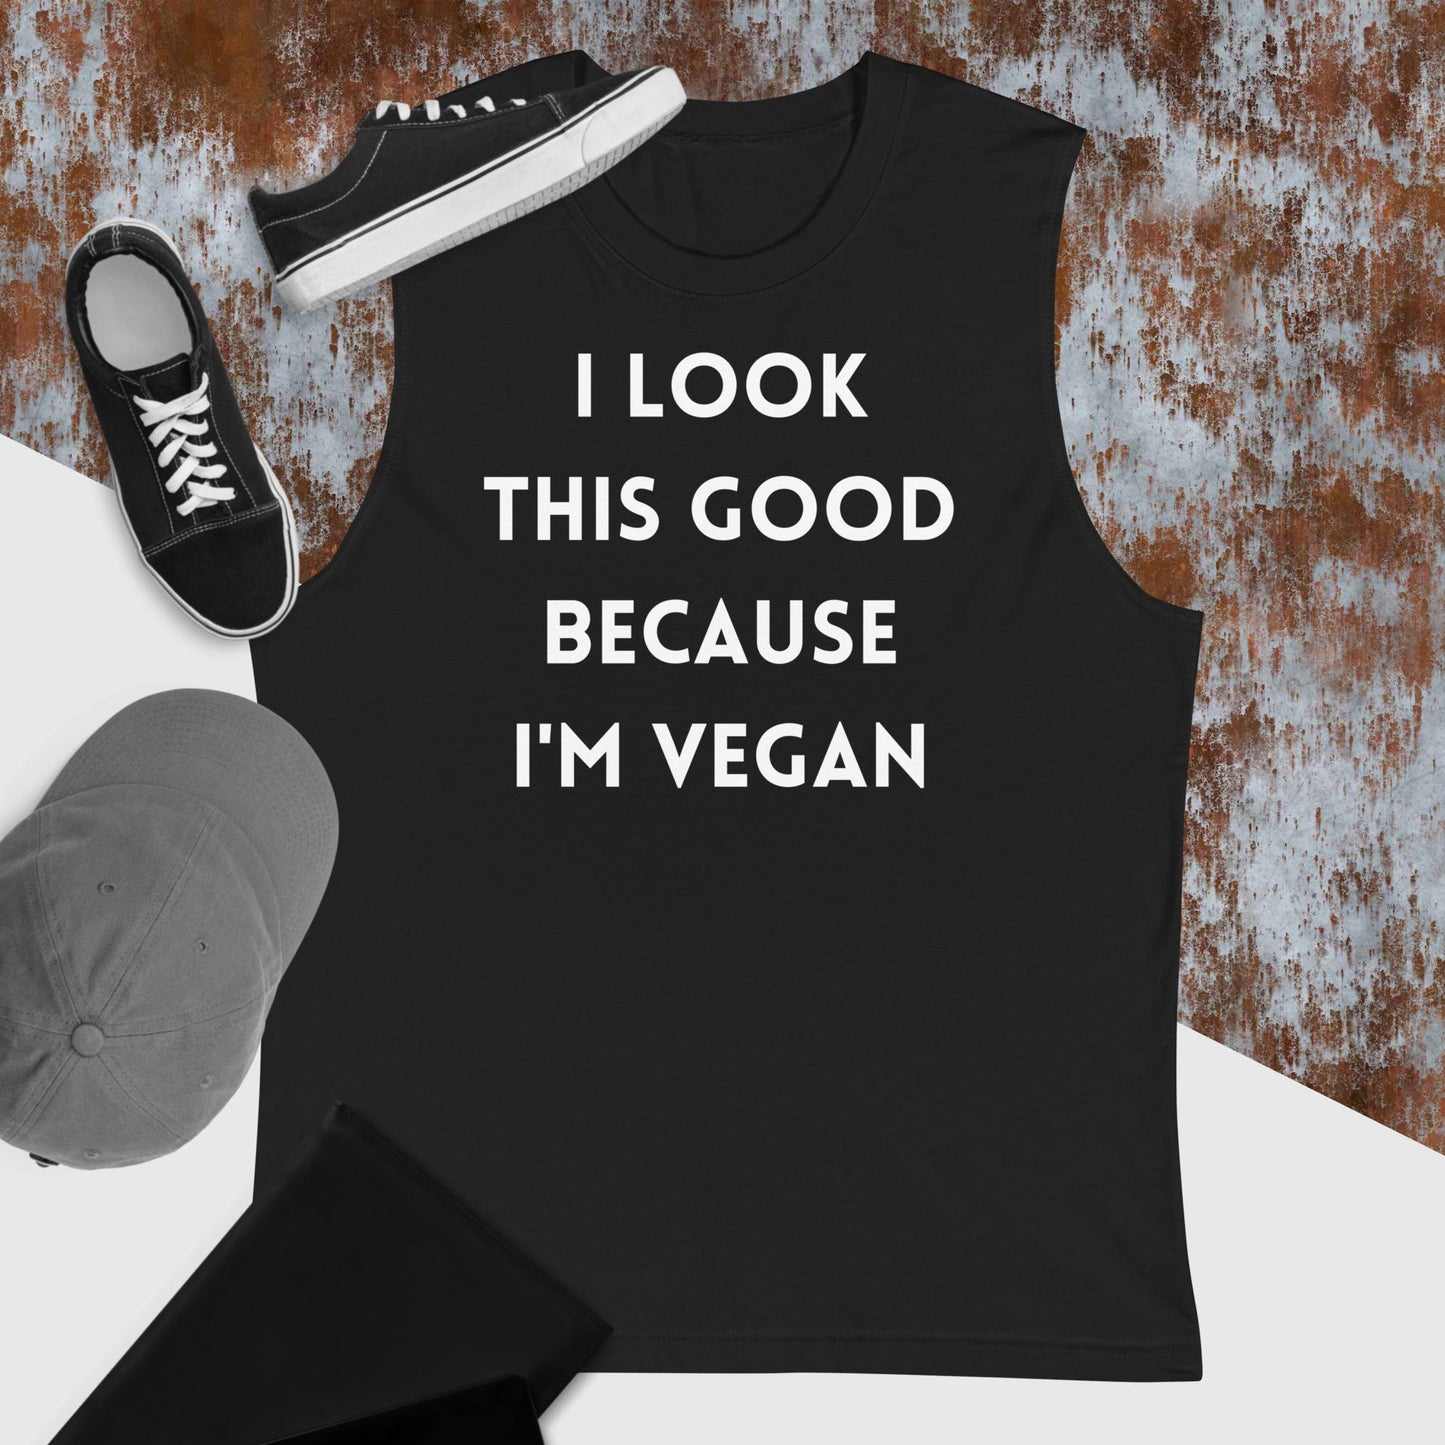 Because I'm Vegan - Unisex Muscle Shirt